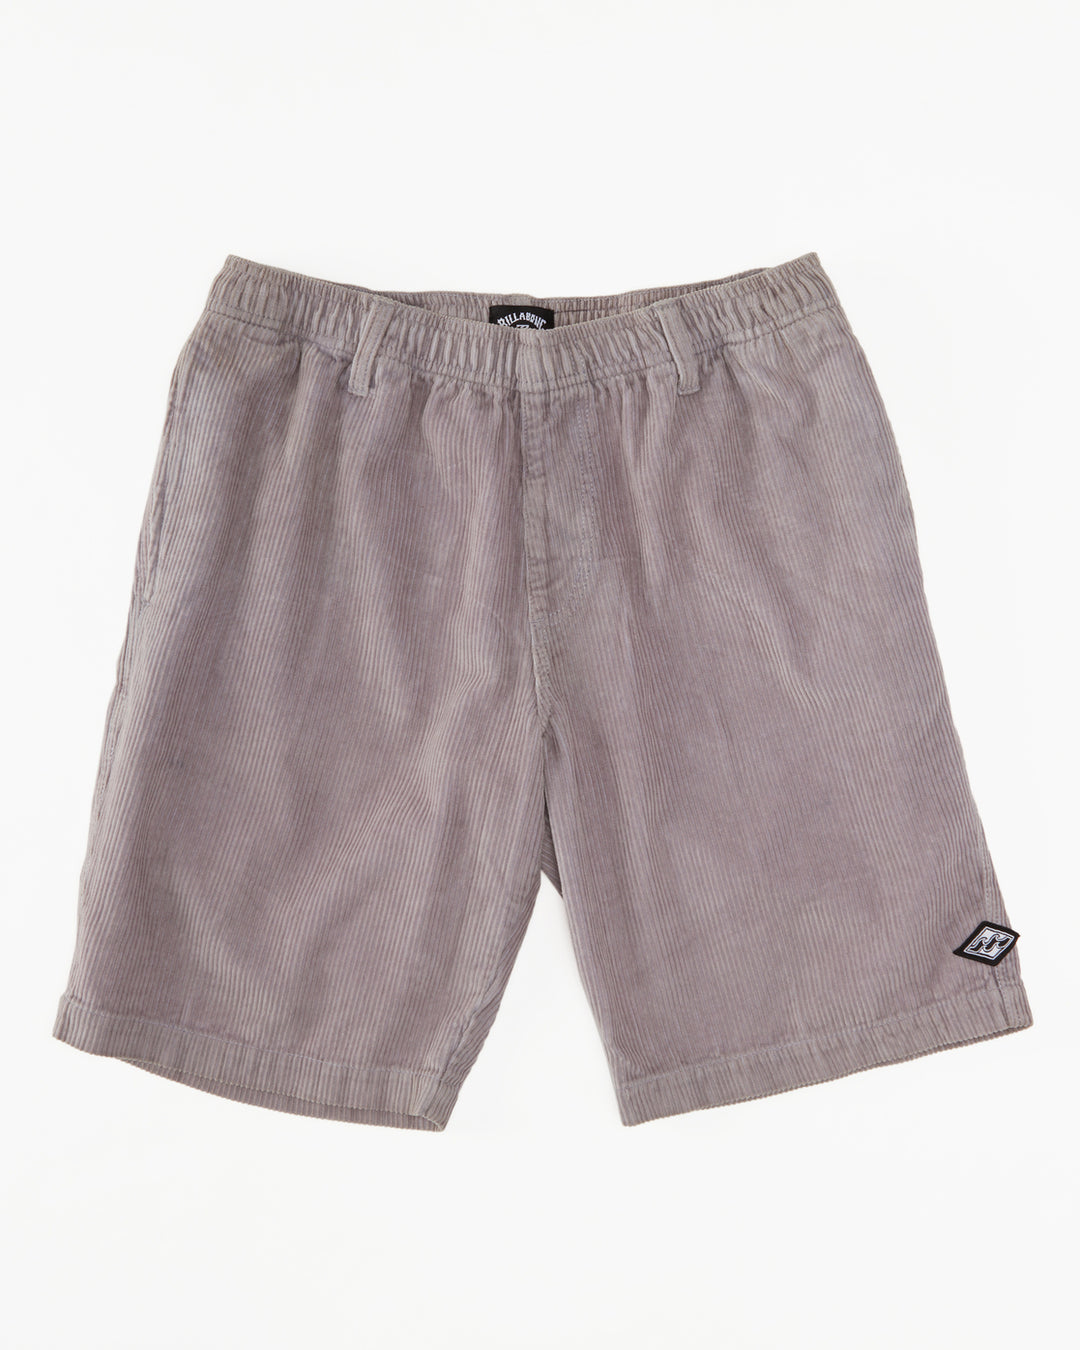 Billabong Larry Corduroy 20" Shorts - Grey Violet - Sun Diego Boardshop